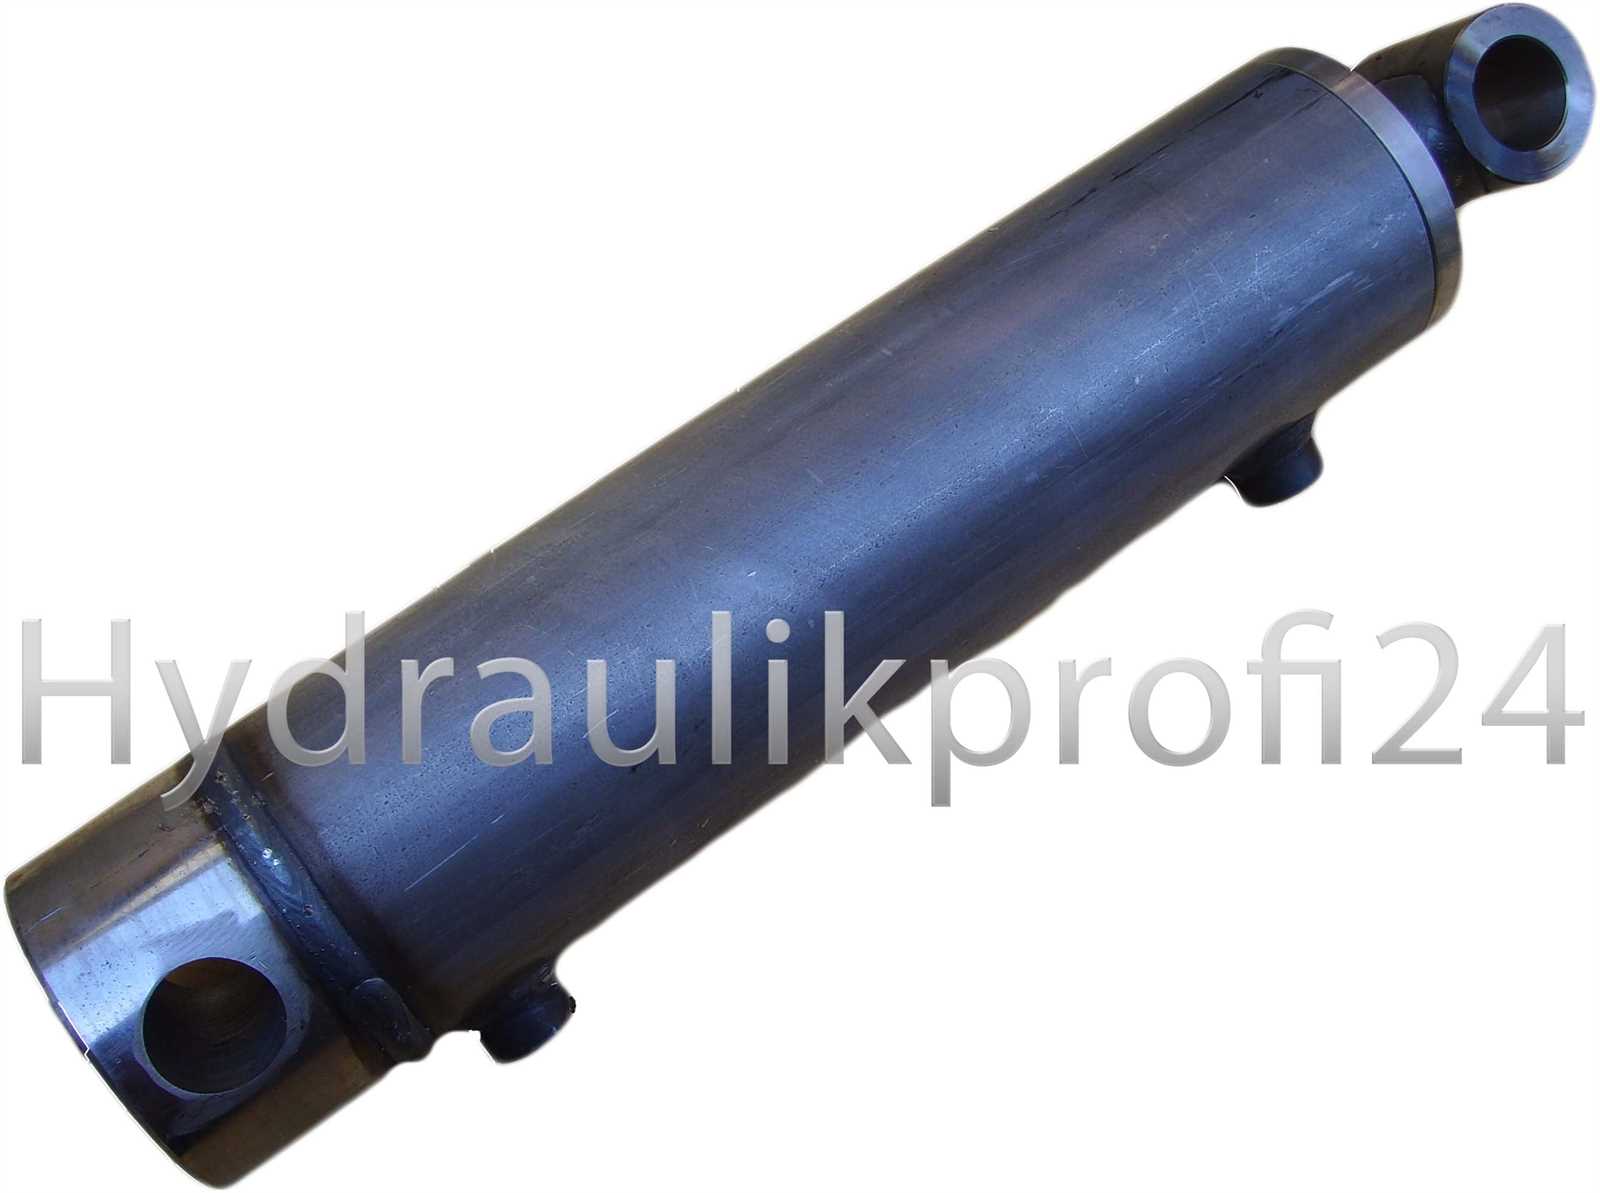 Hydraulikprofi24 - Hydraulikzylinder doppeltwirkend mit